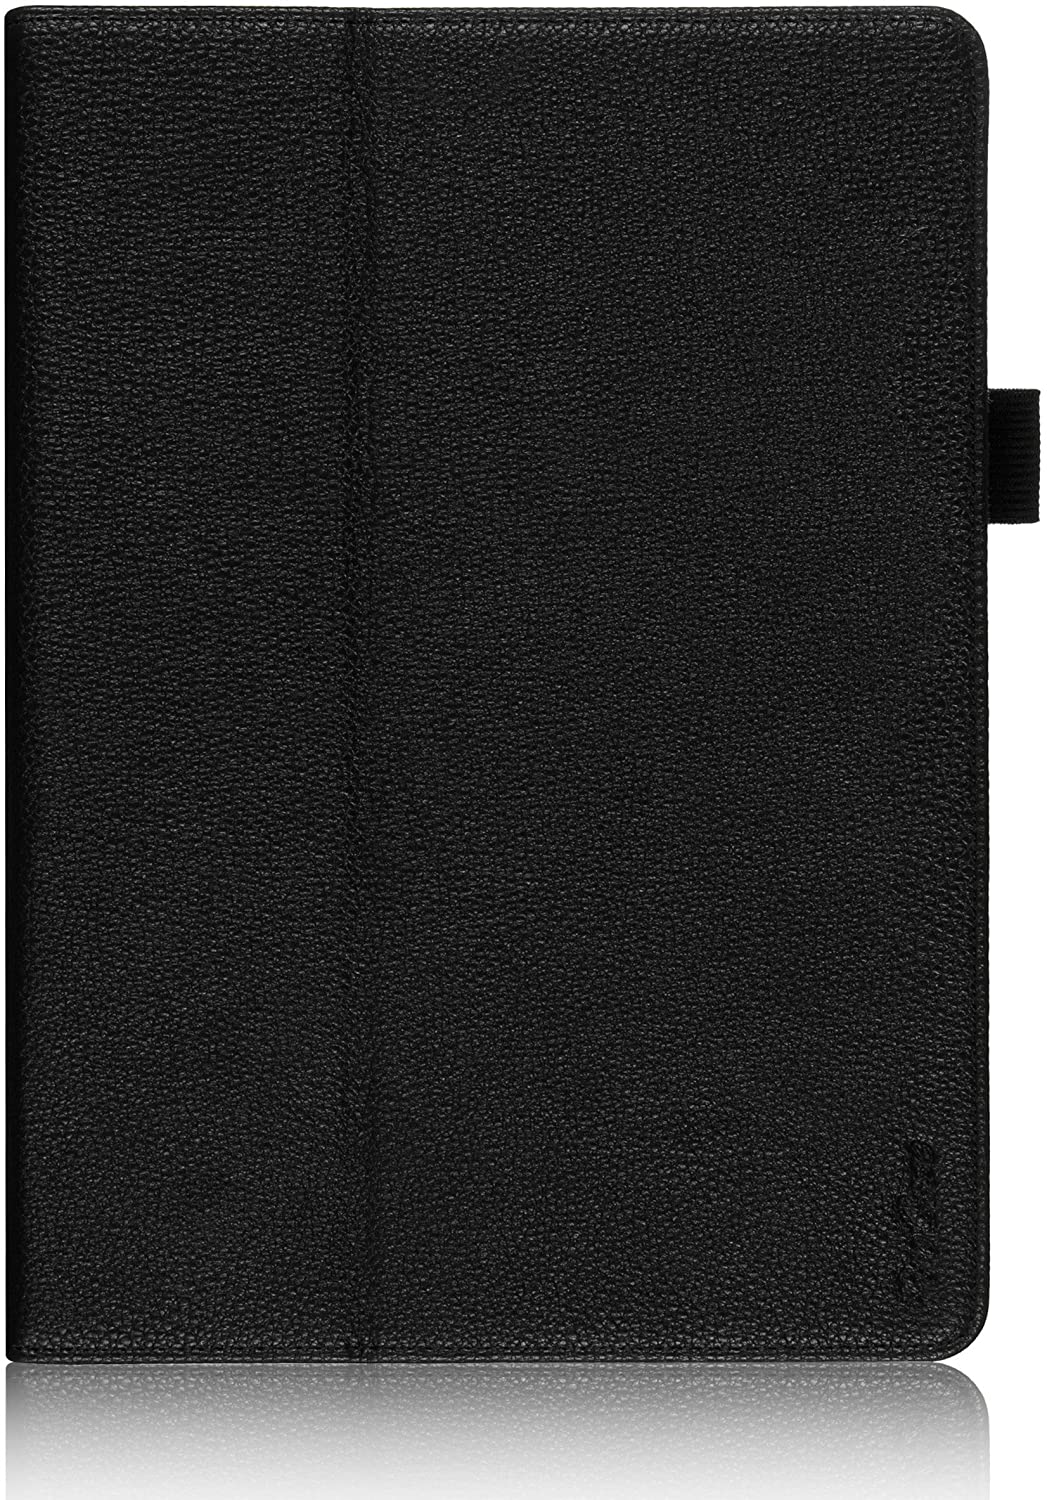 Galaxy Tab 2 10.1 Leather Folio Cover Case | Yapears